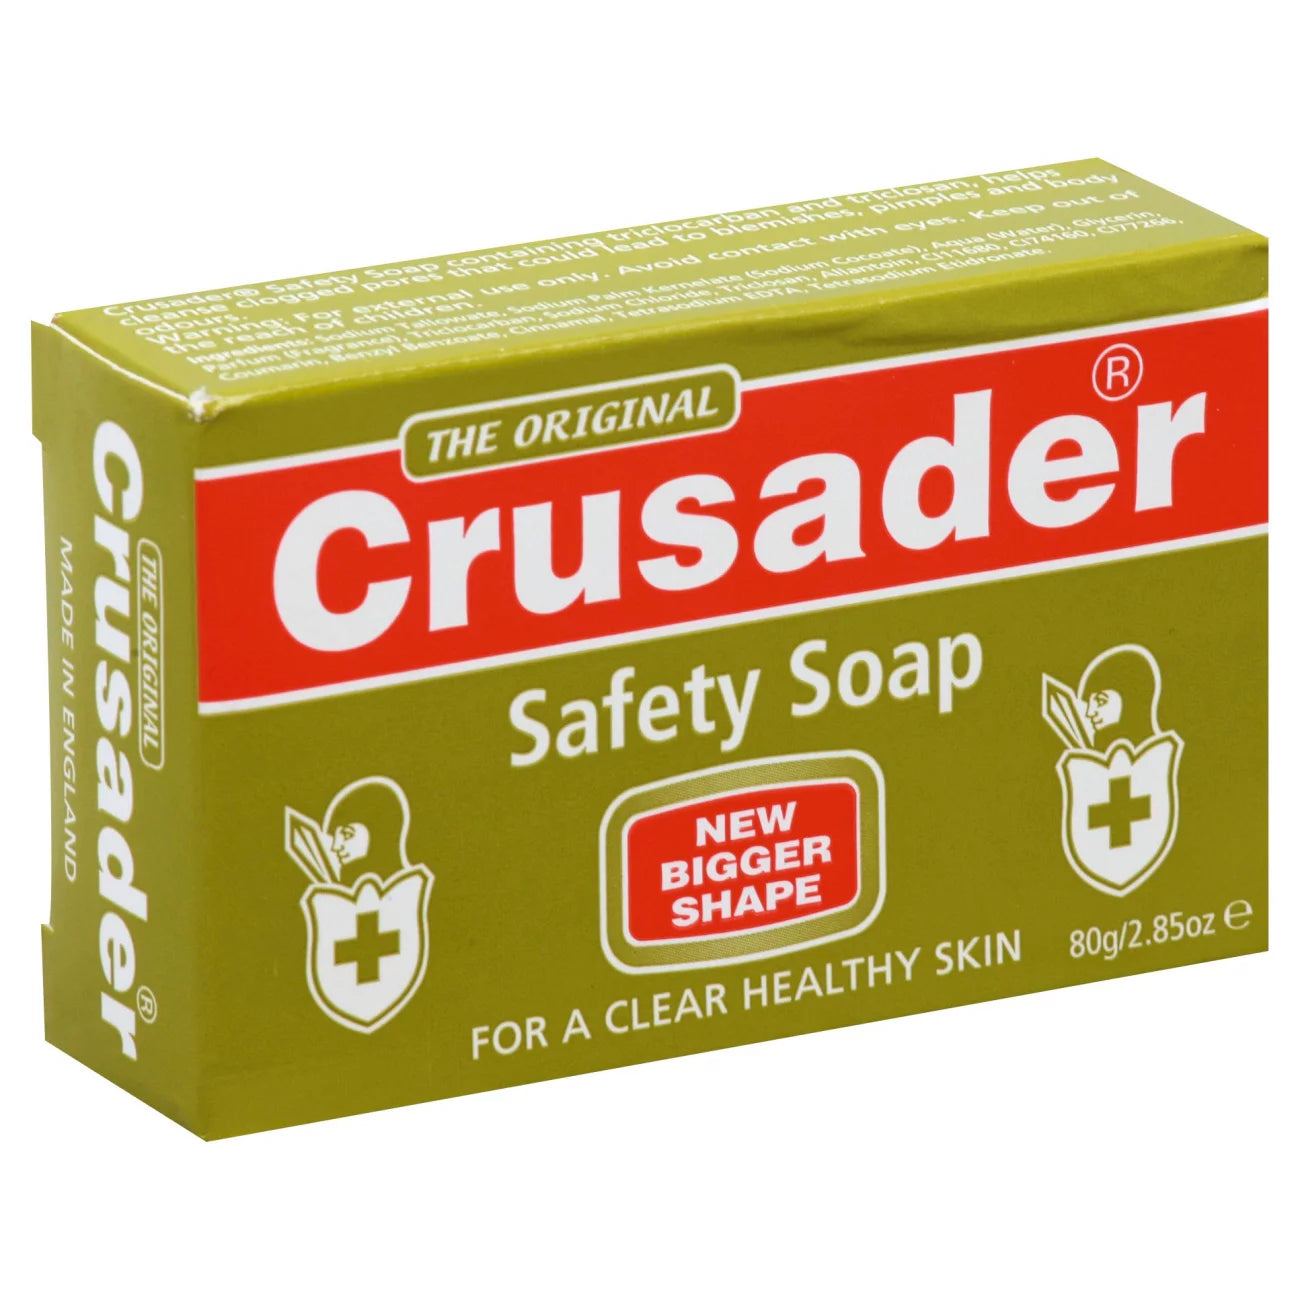 Crusader Safety Soap